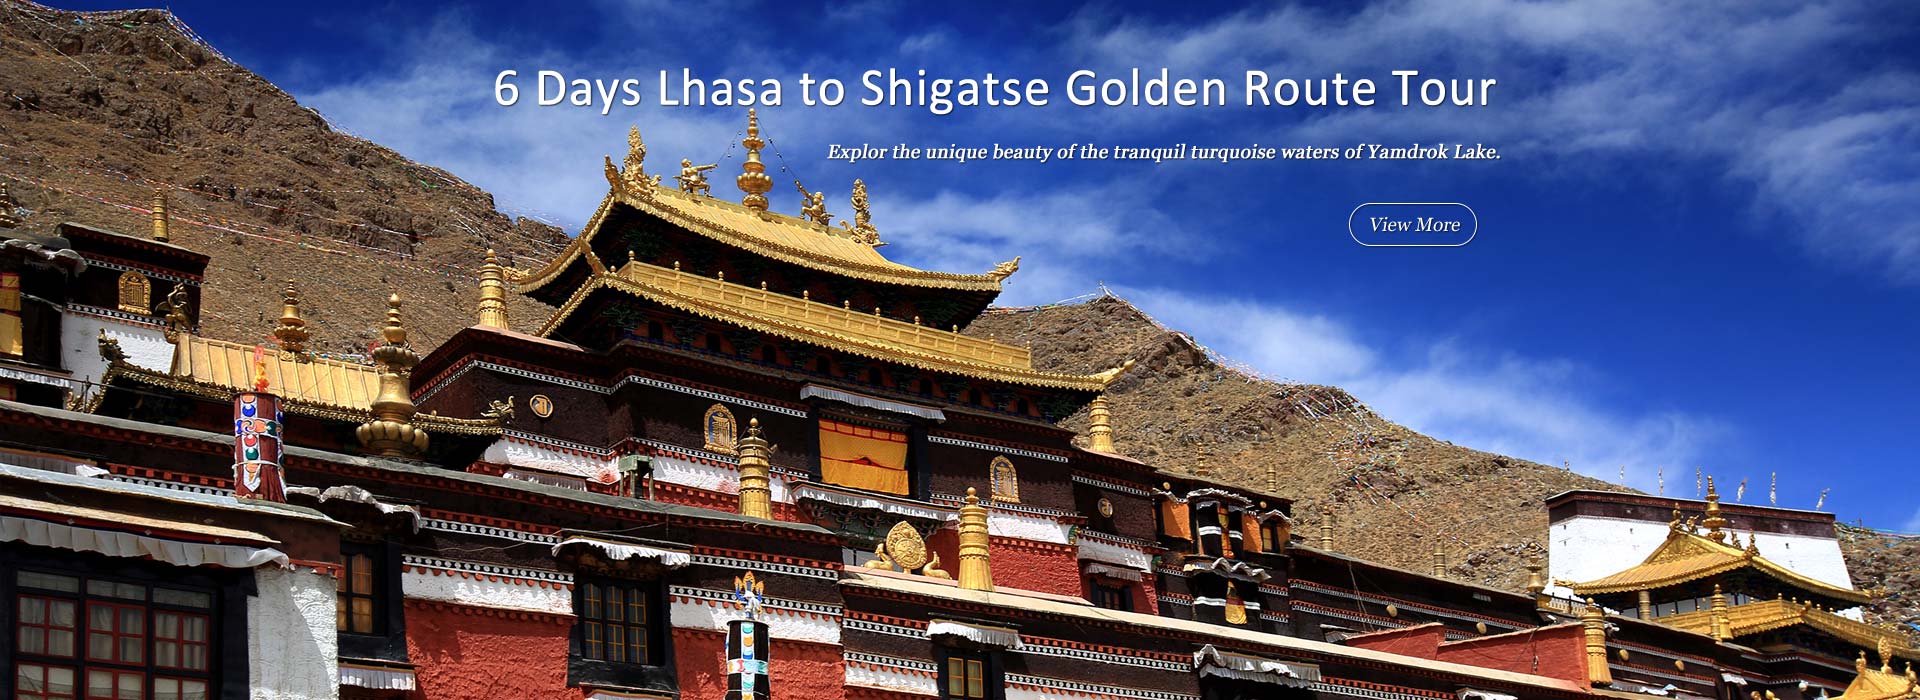 6 Days Tibet Golden Route Tour